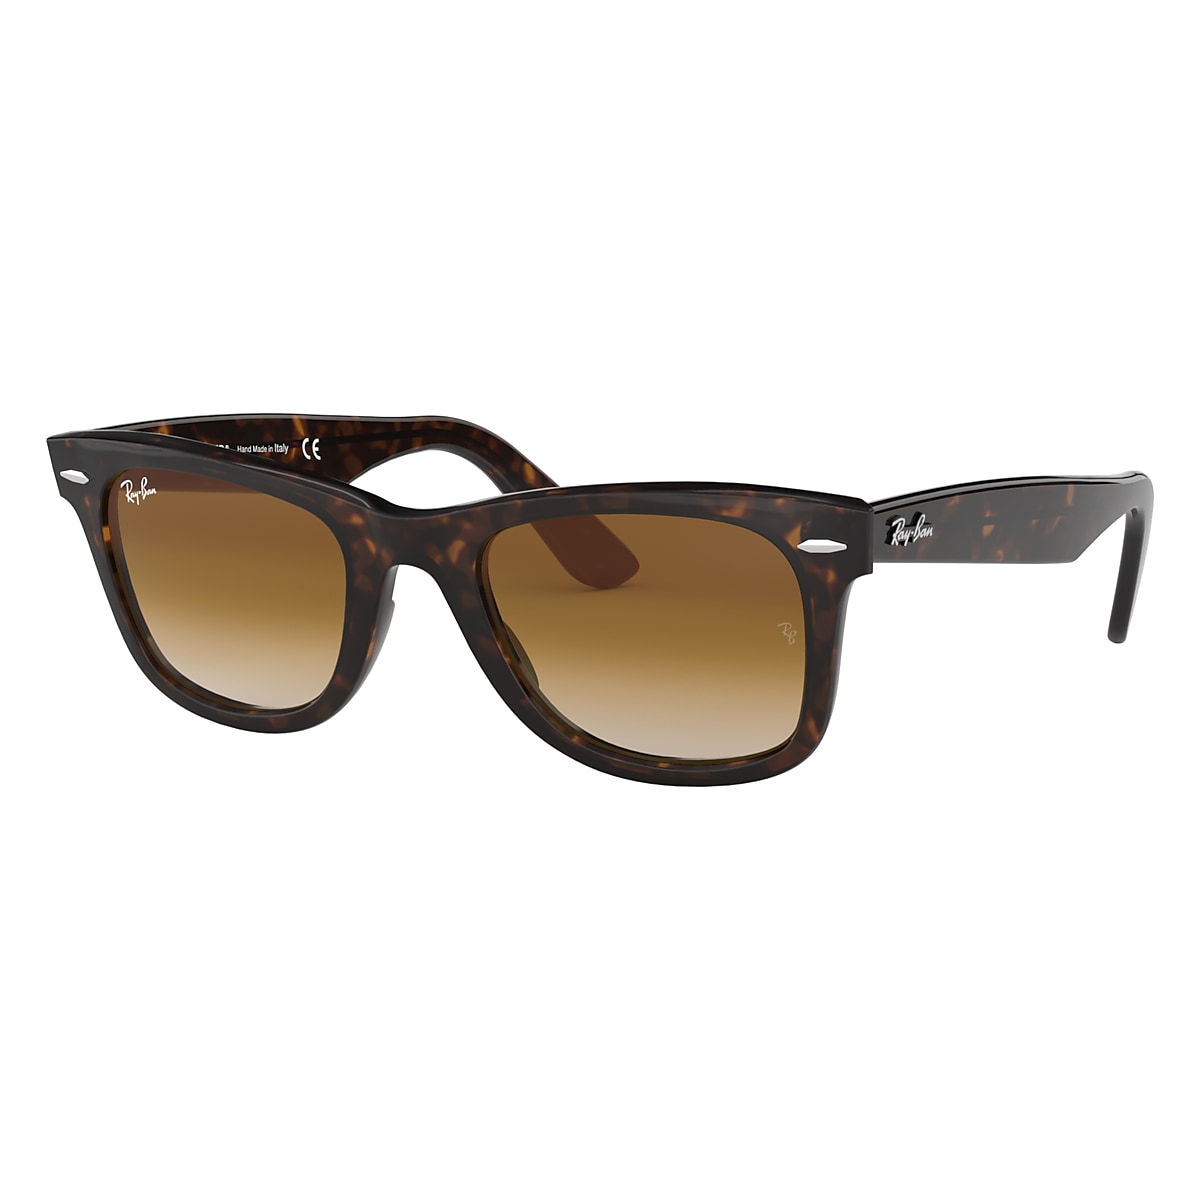 Original Wayfarer Classic Sunglasses in Tortoise and Light Brown | Ray-Ban®